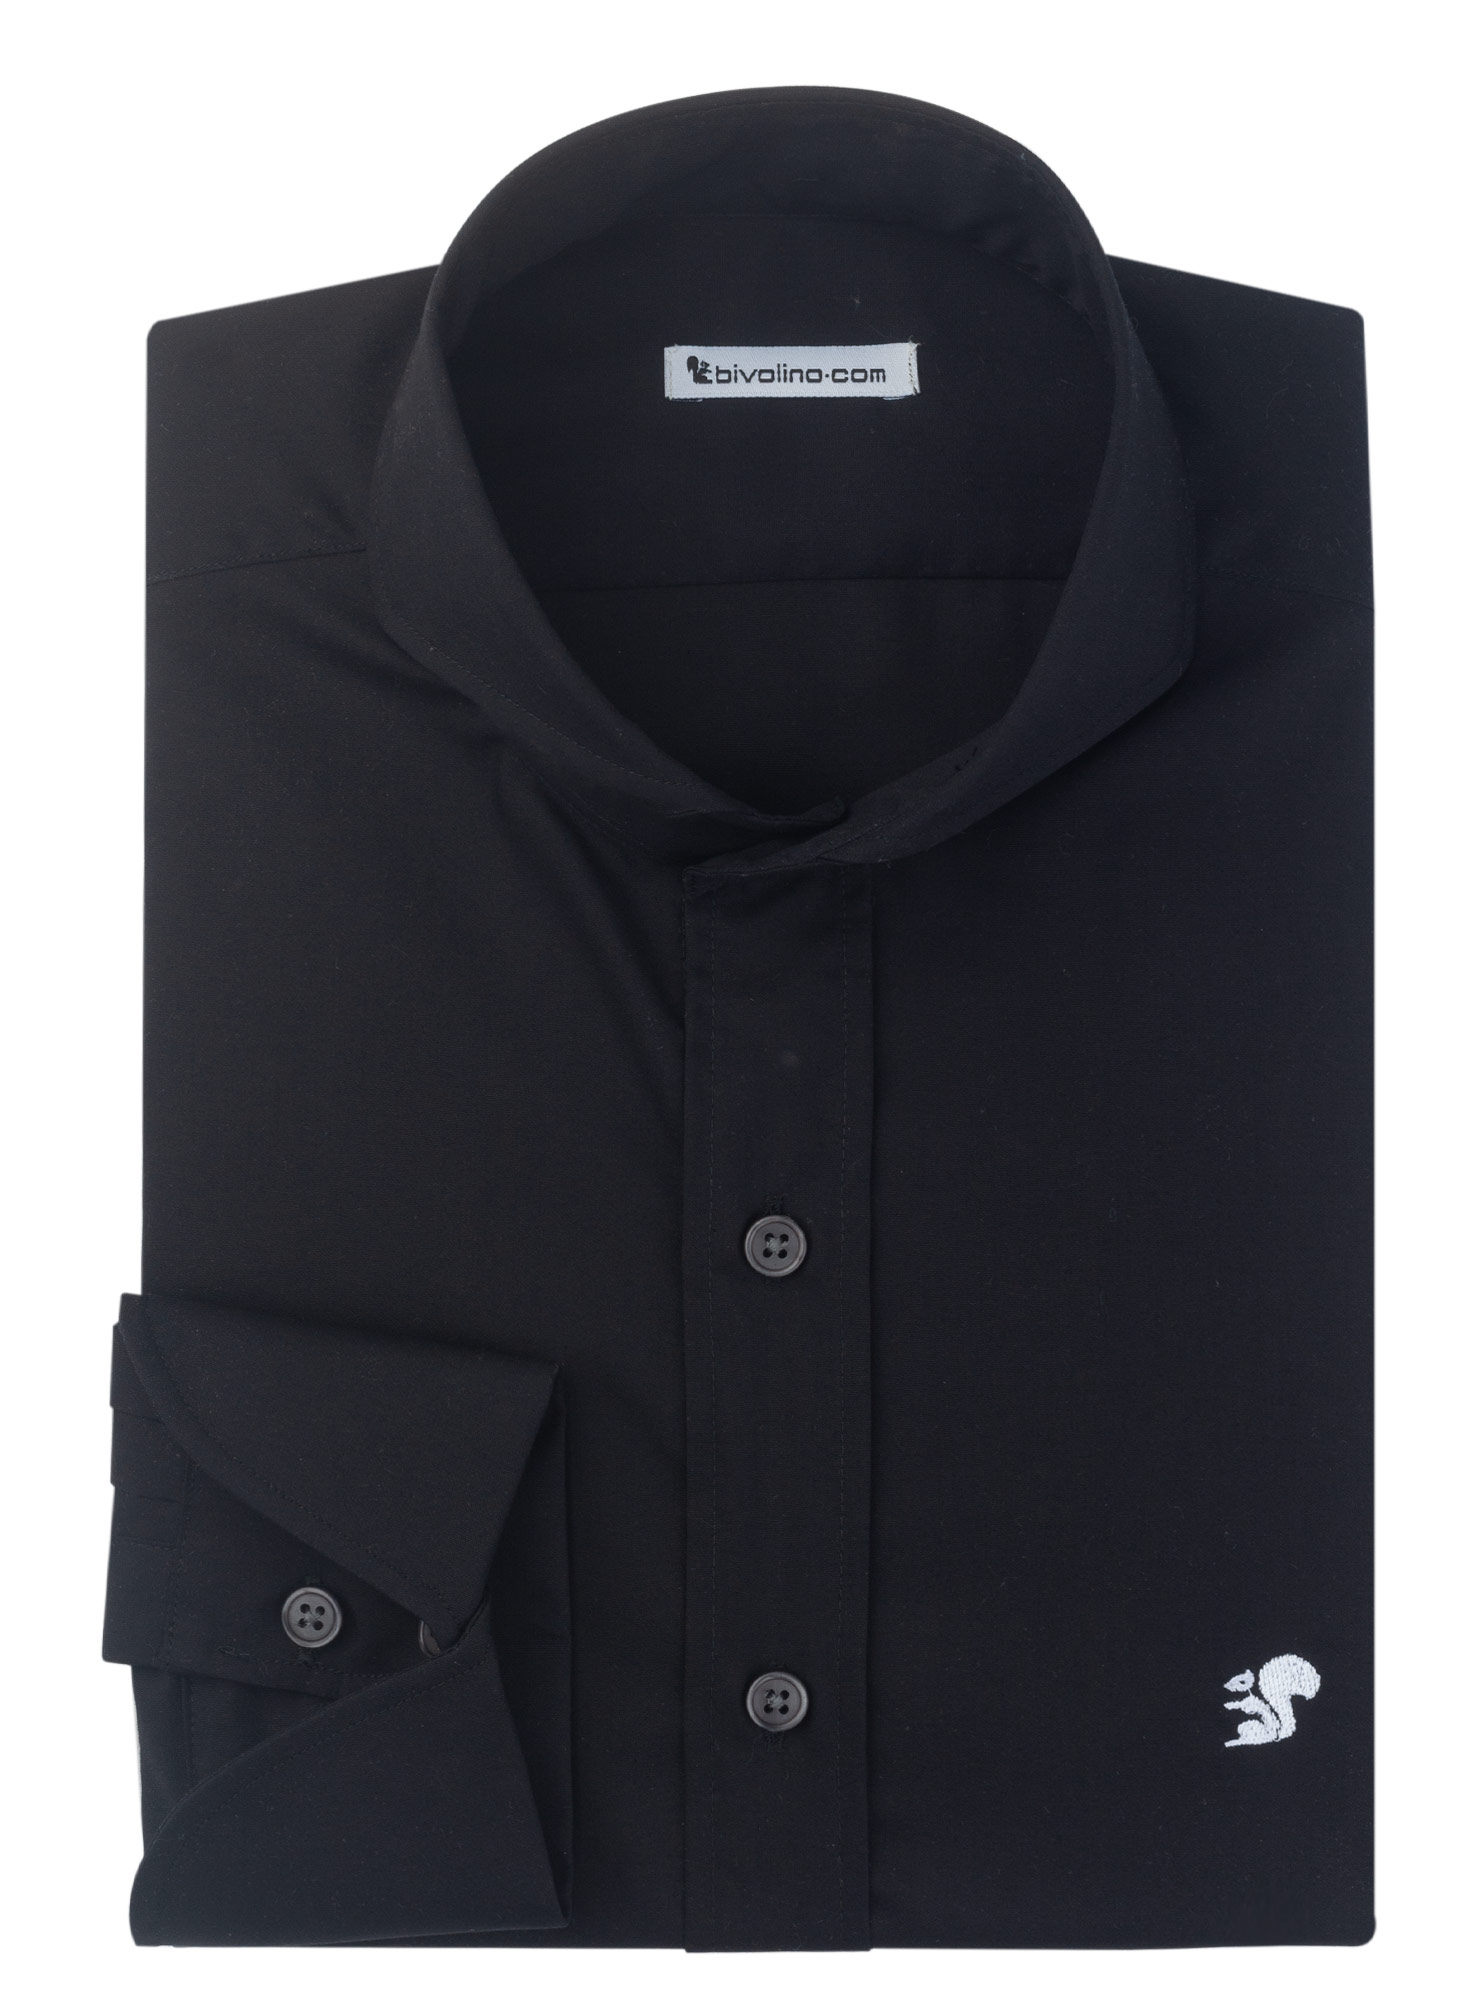 LANUSEI - chemise homme Twill Noir sans repassage - Opal 6-Shrewsbury